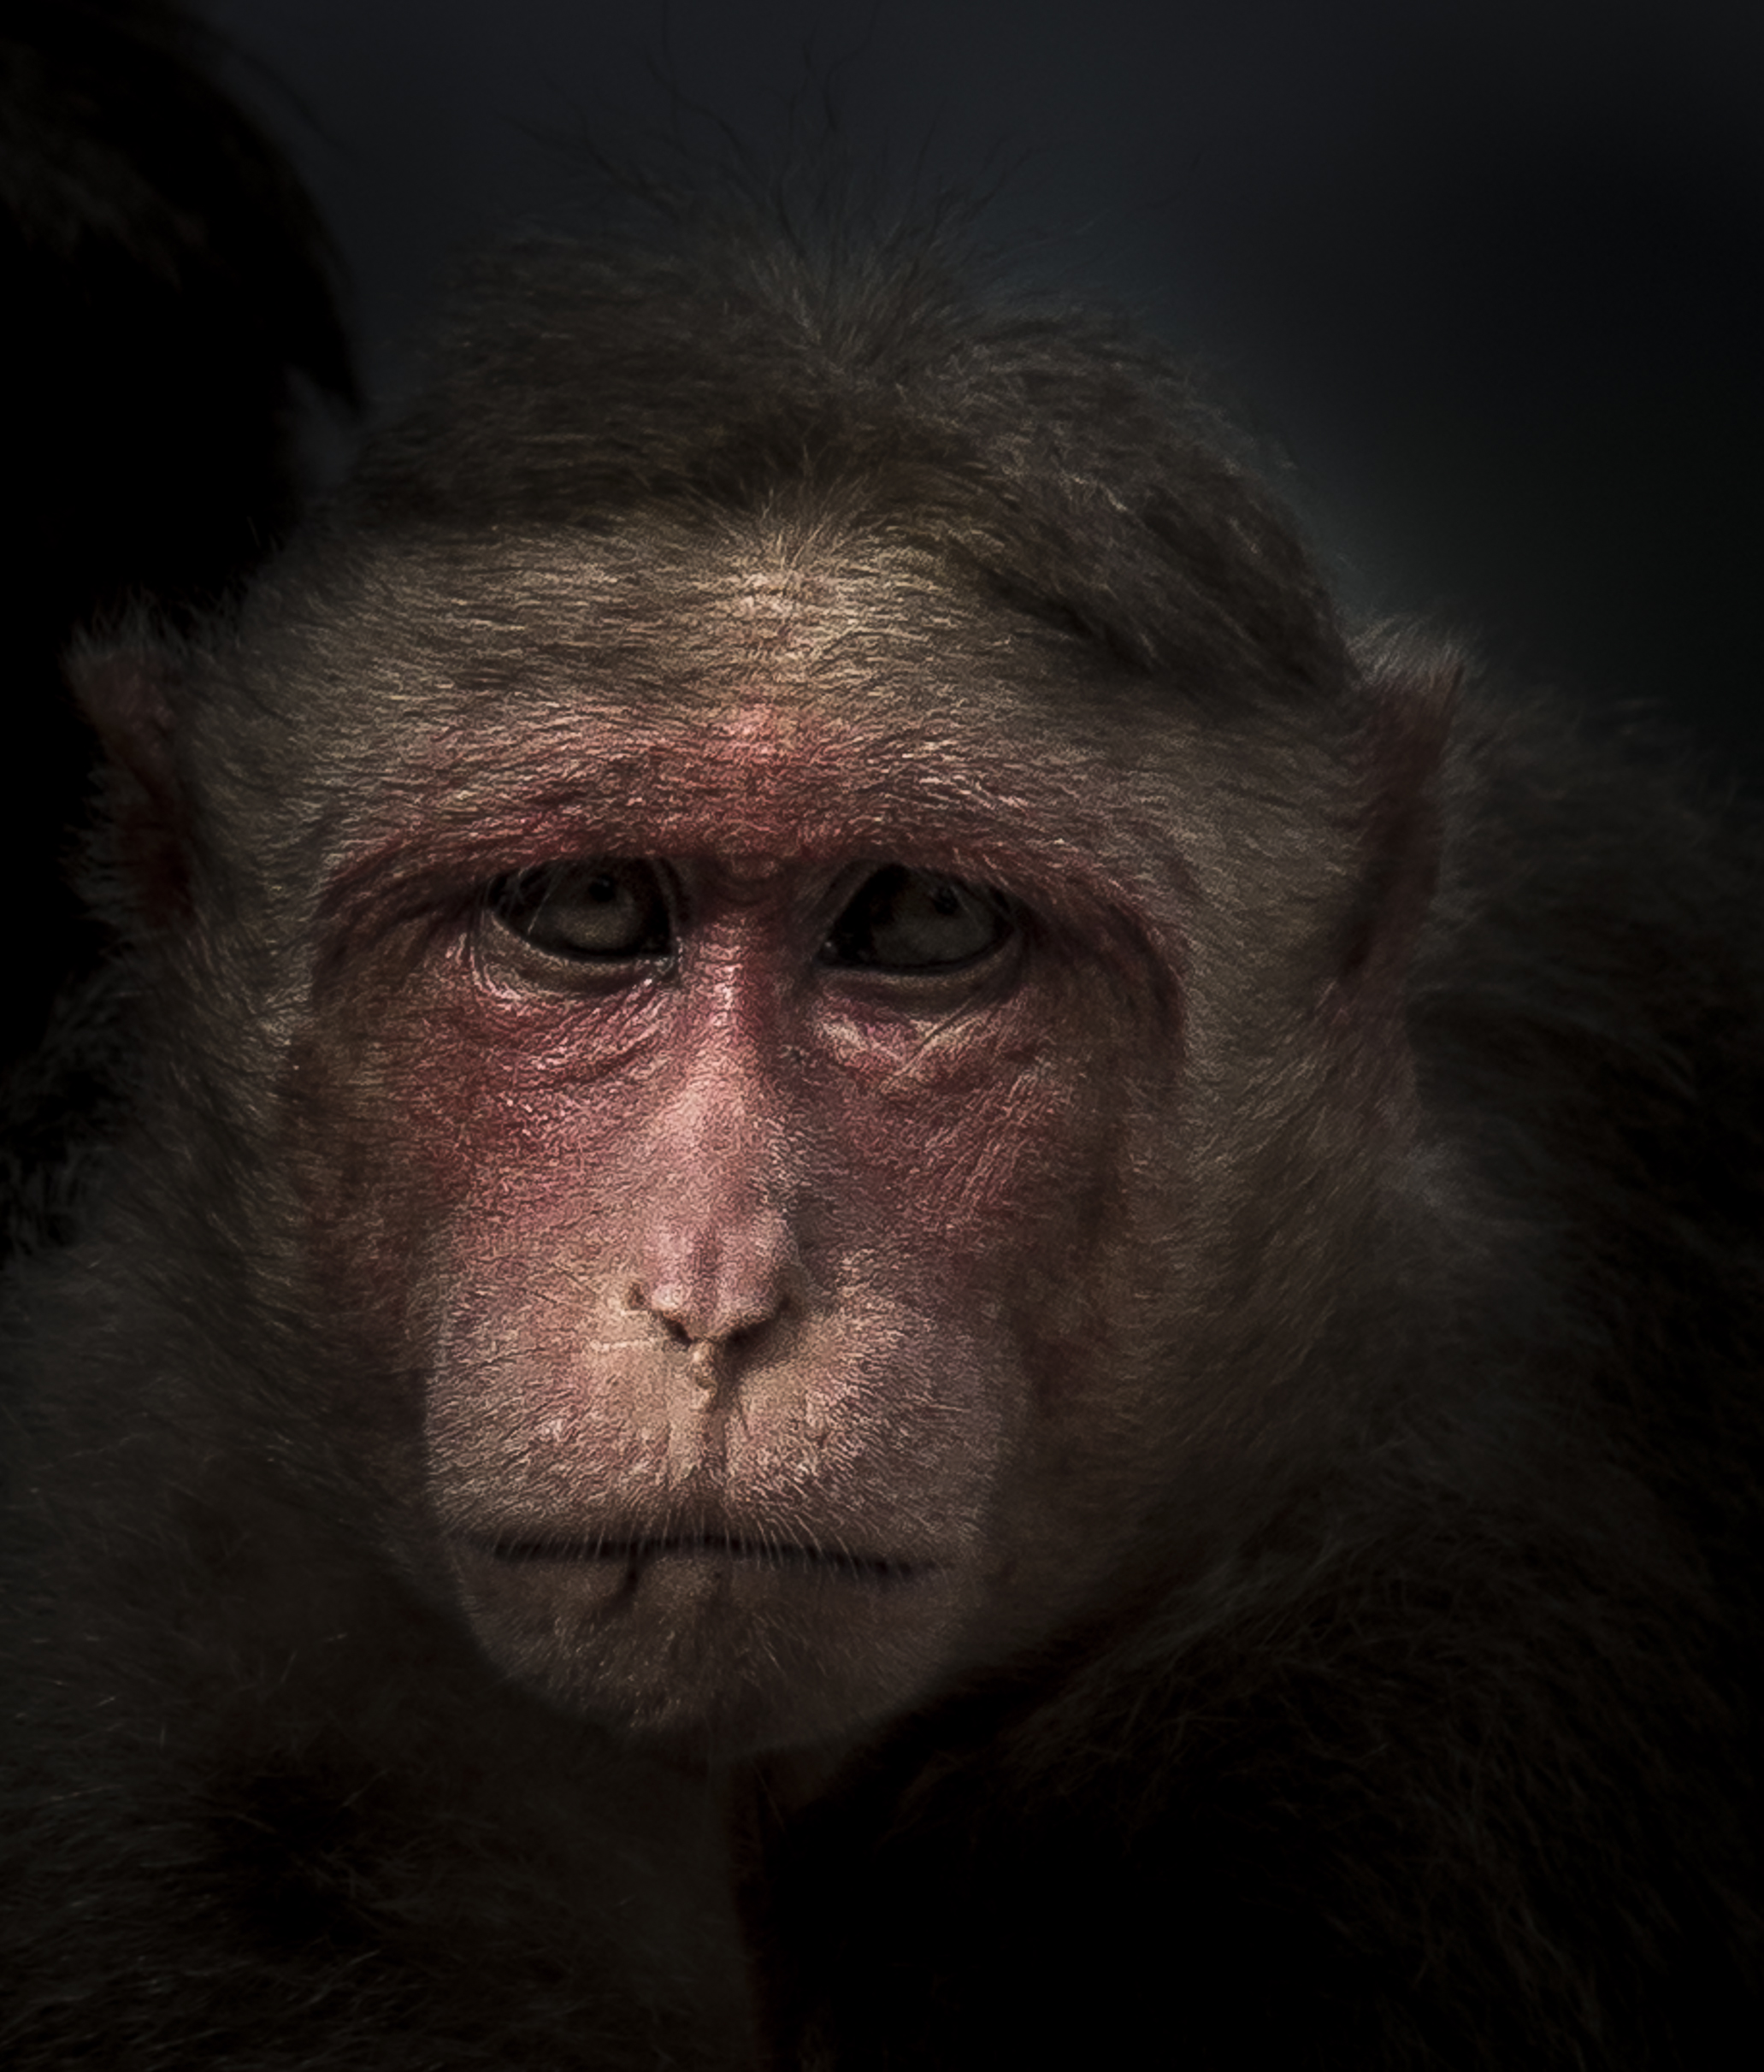 Face of a monkey